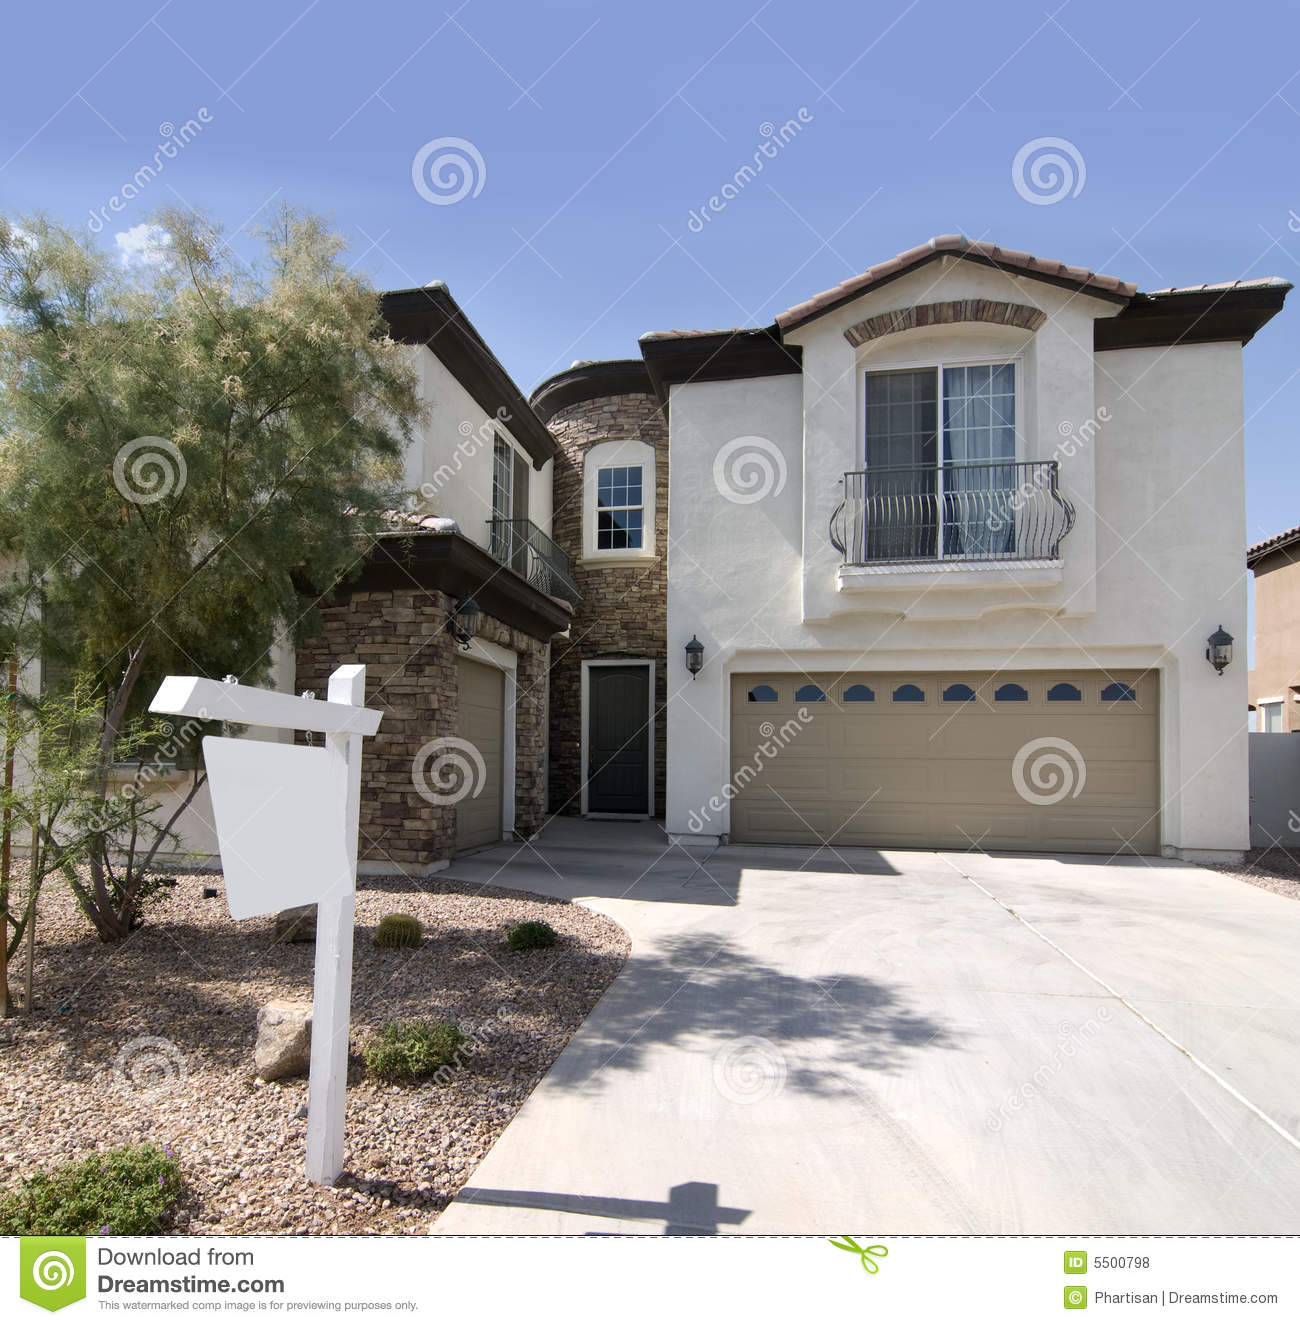 Beautiful Homes for Sale in Arizona